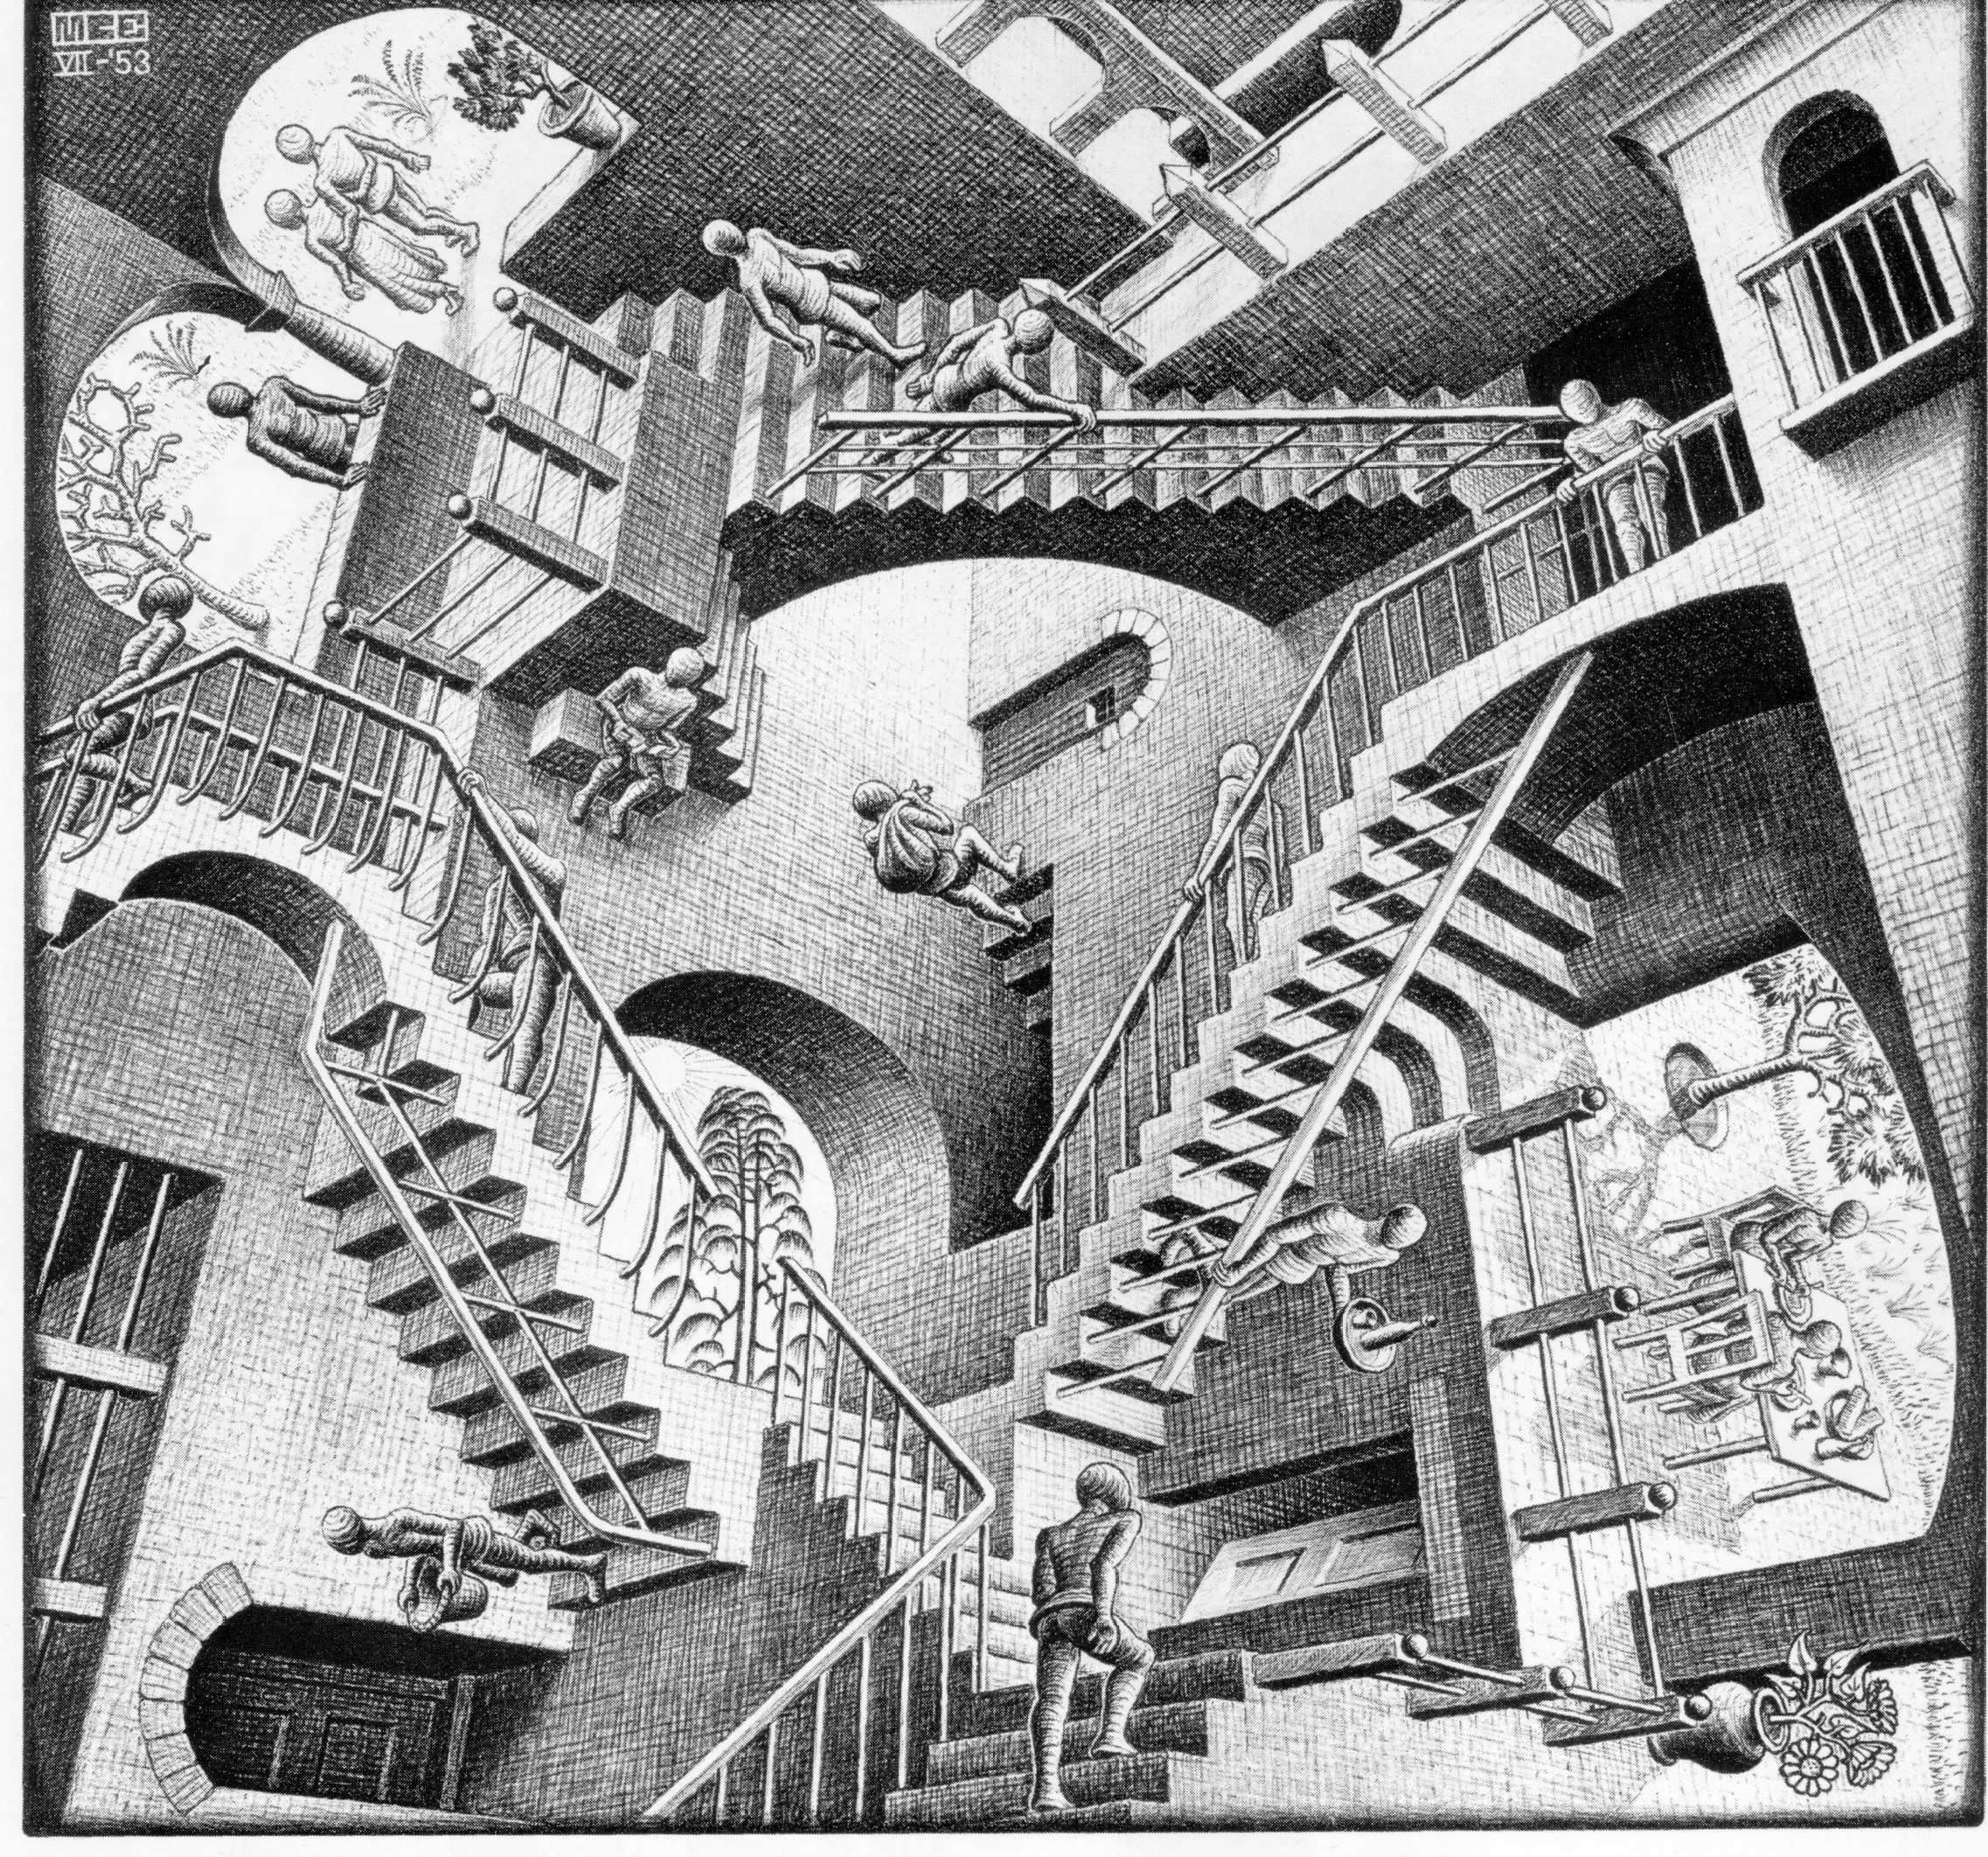 M.C. Escher pictures